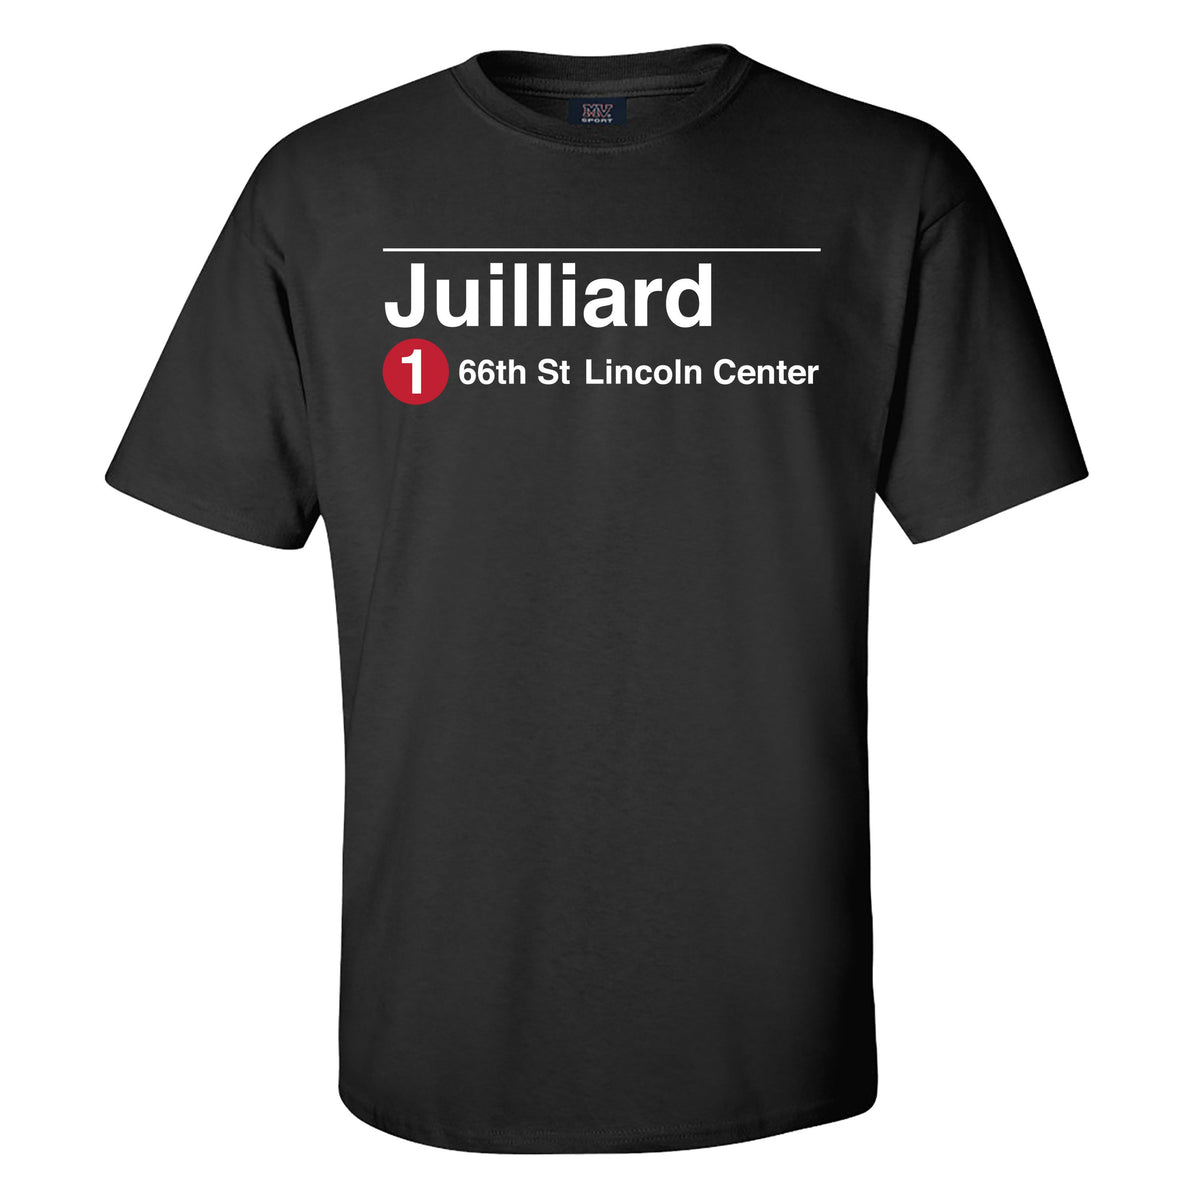 T-shirt: Juilliard Subway tee 66th Street